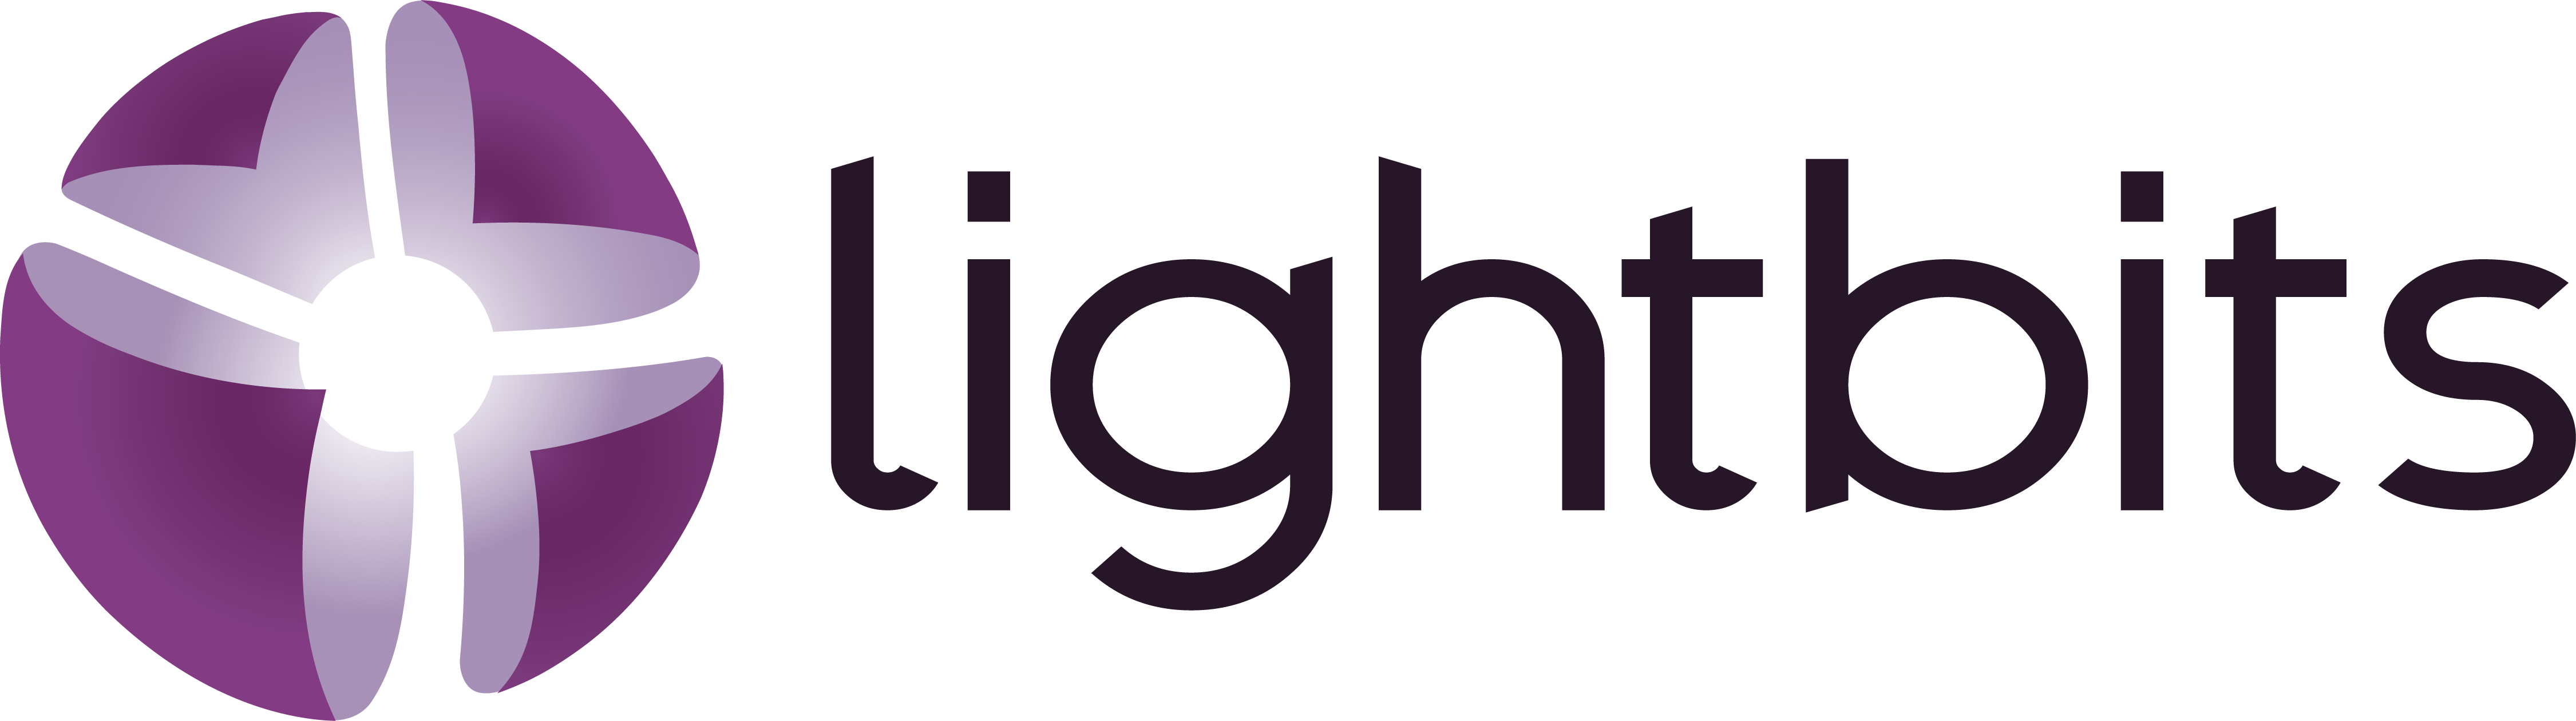 Lightbits Labs